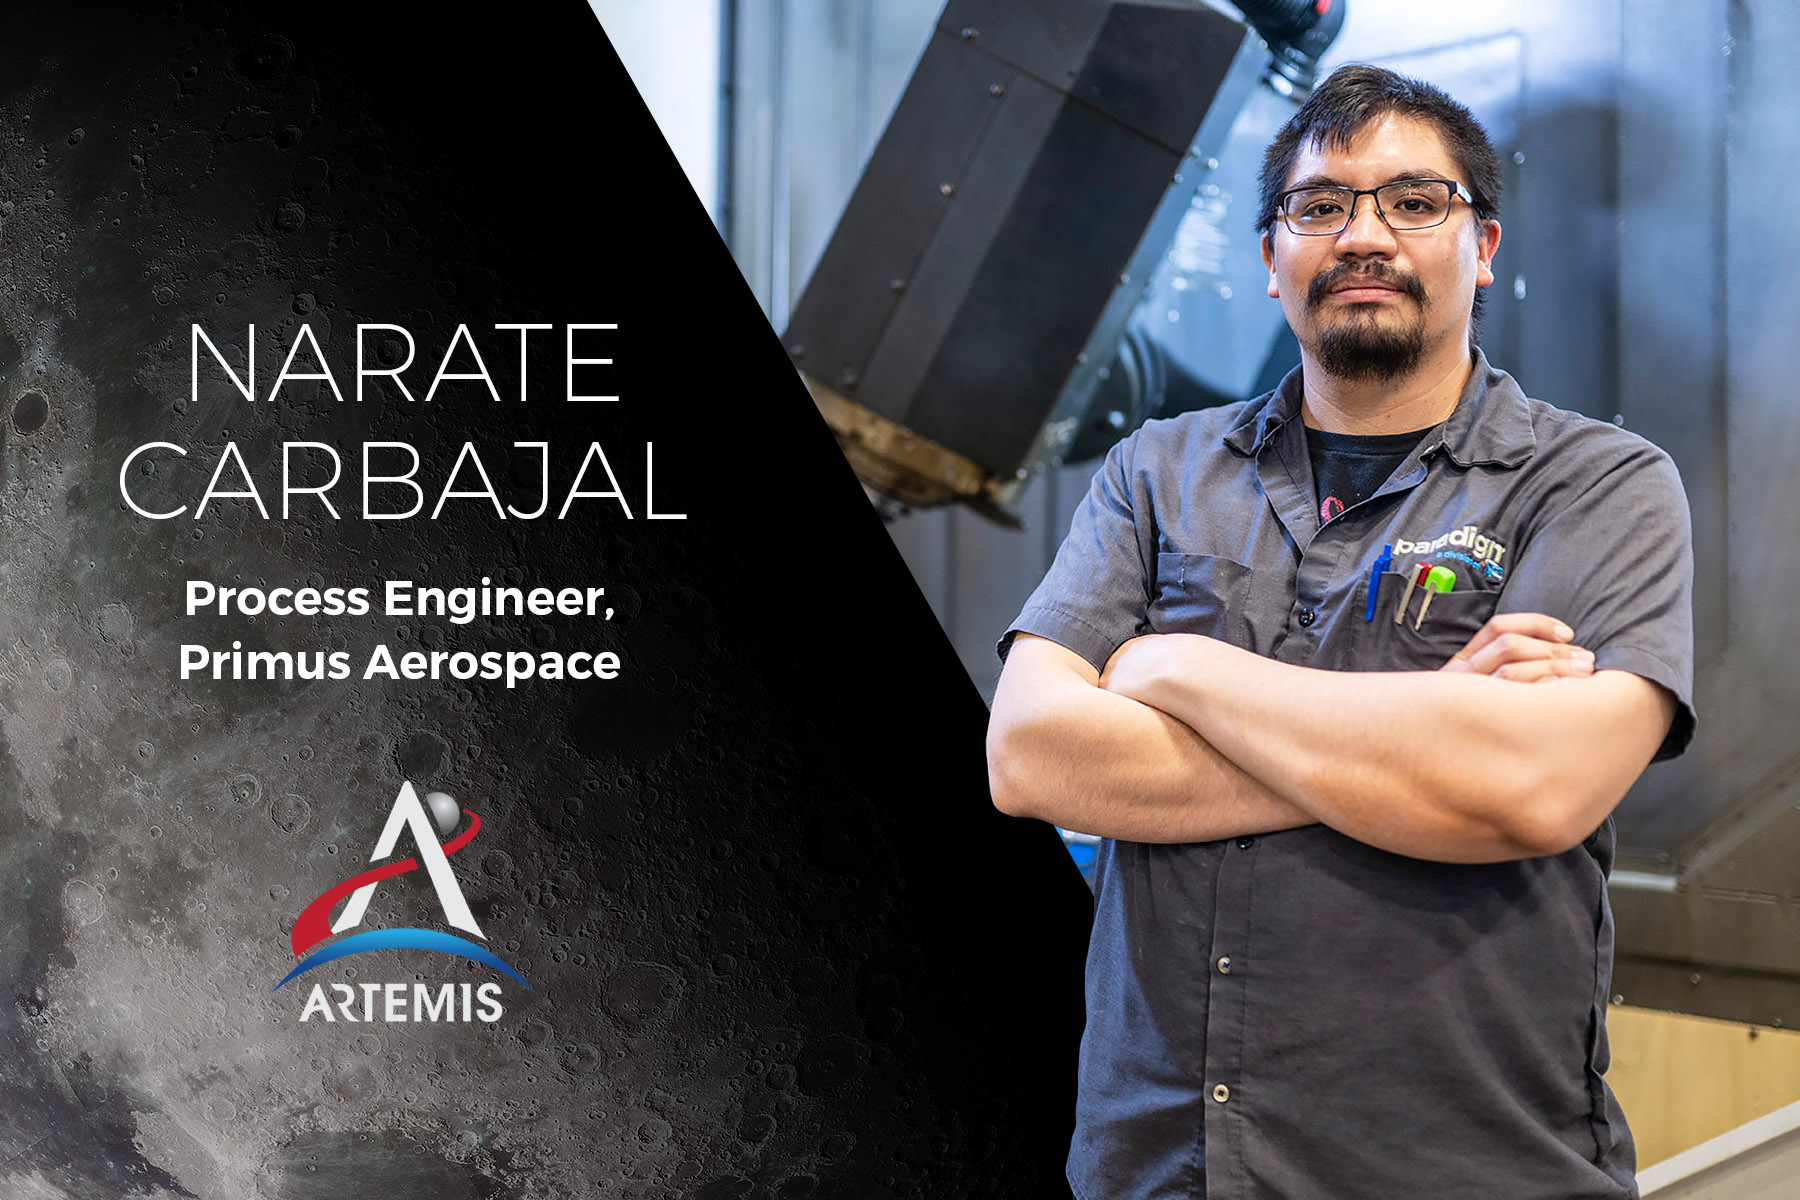 I am Artemis: Narate Carbajal. Process Engineer for Primus Aerospace.